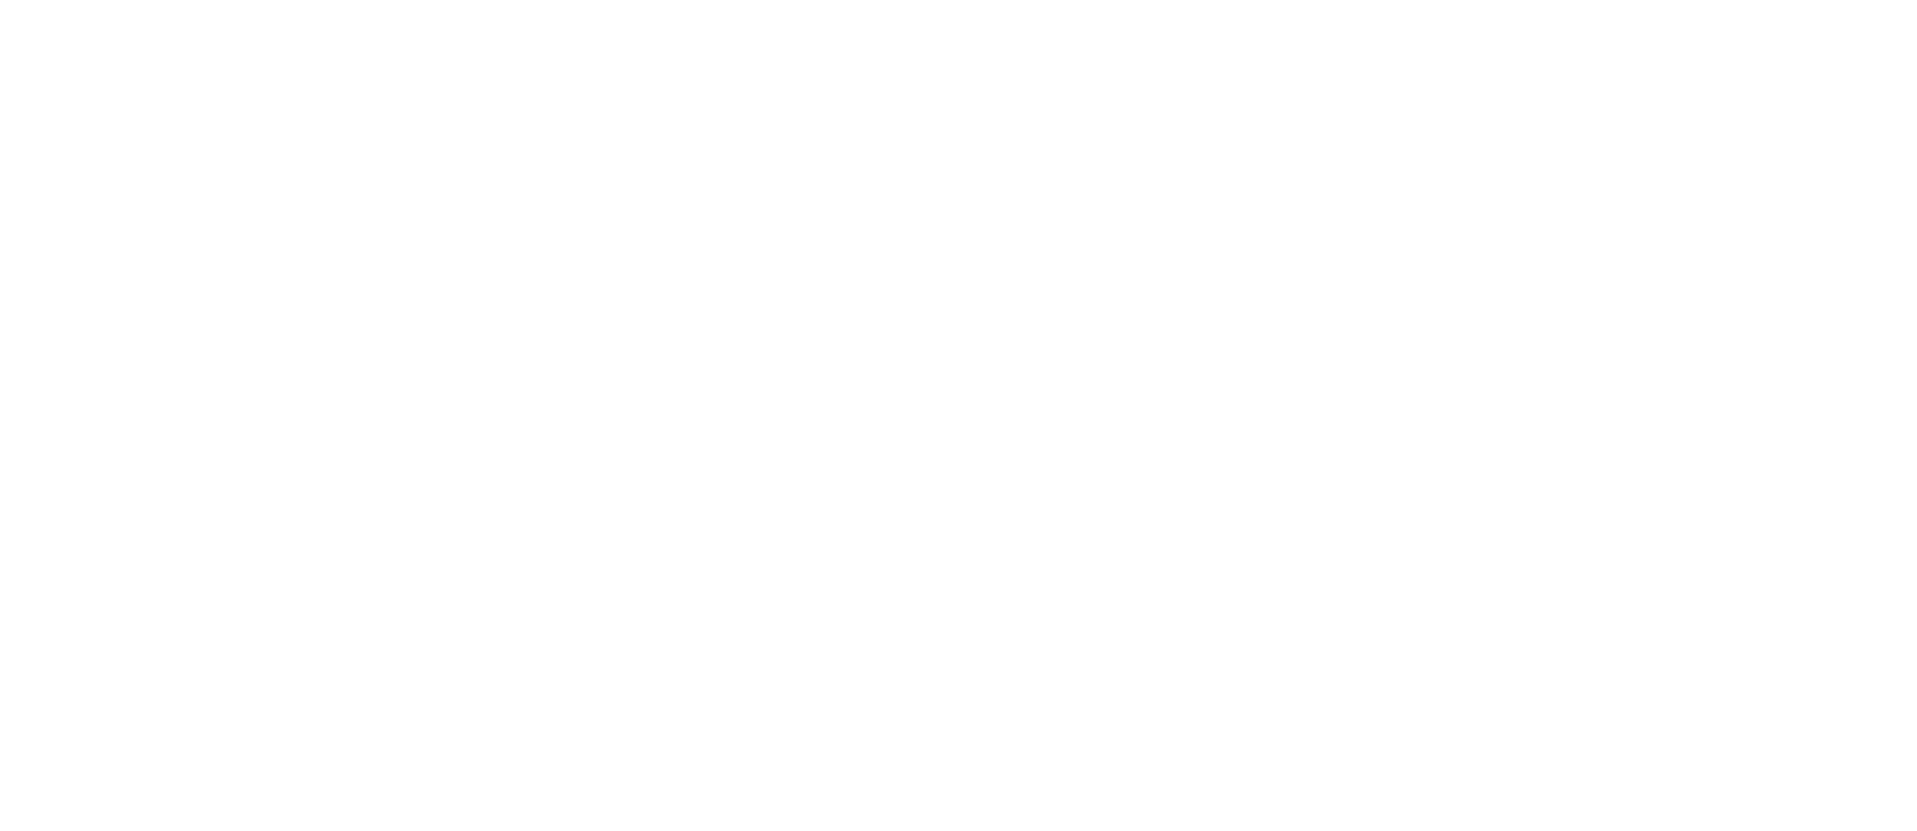 The Inventor logo